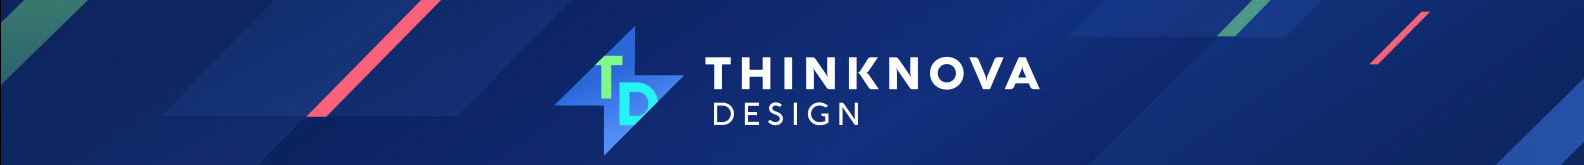 Thinknova Design profil başlığı